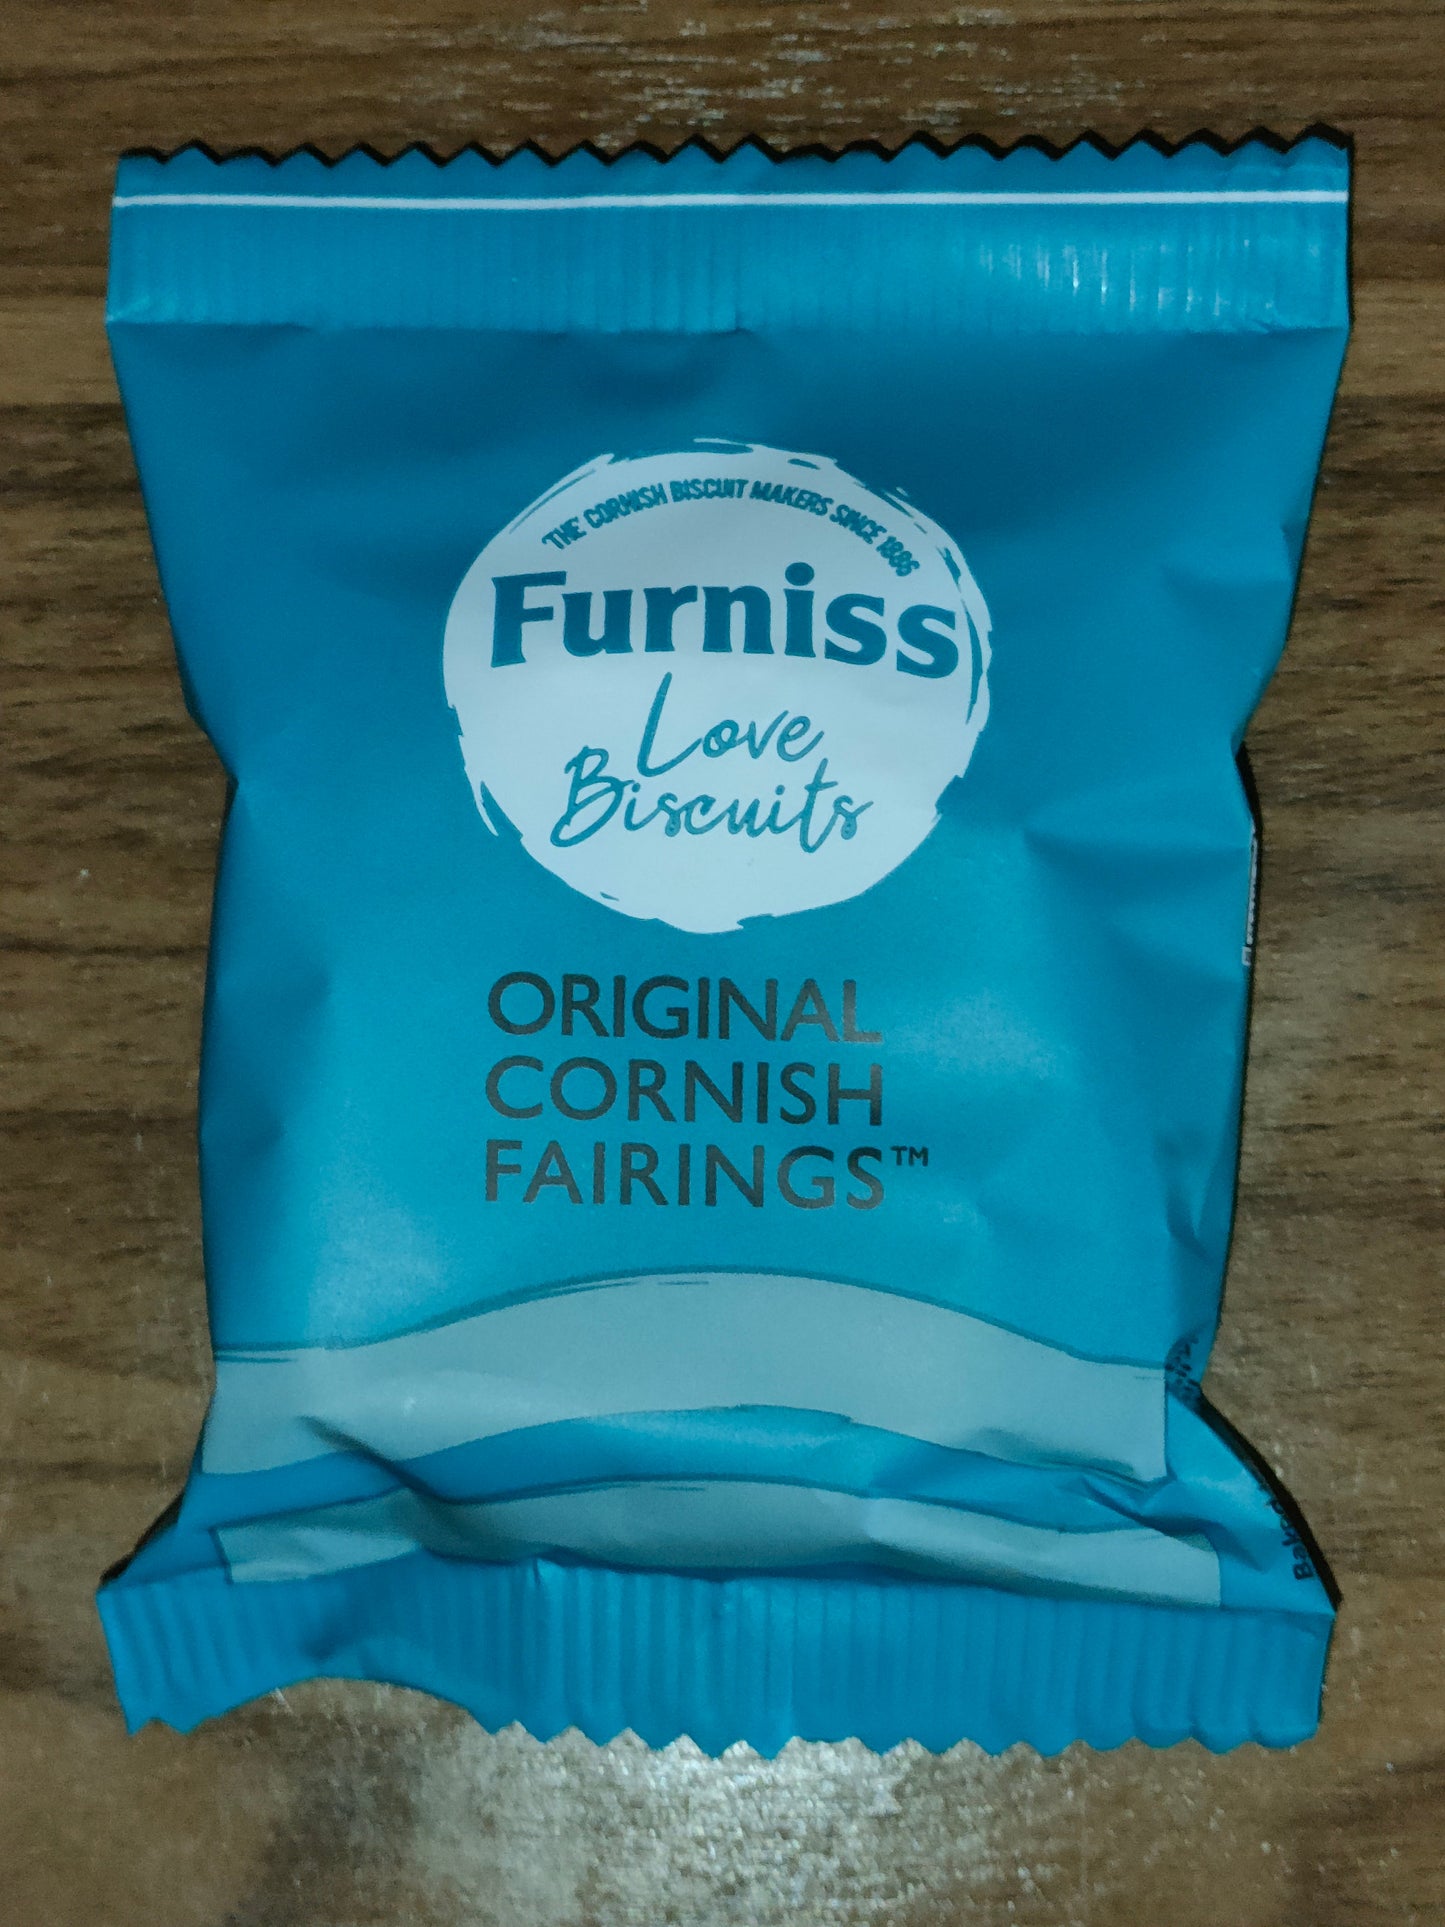 Furniss fairings twin pack - The Cornish Scone Company